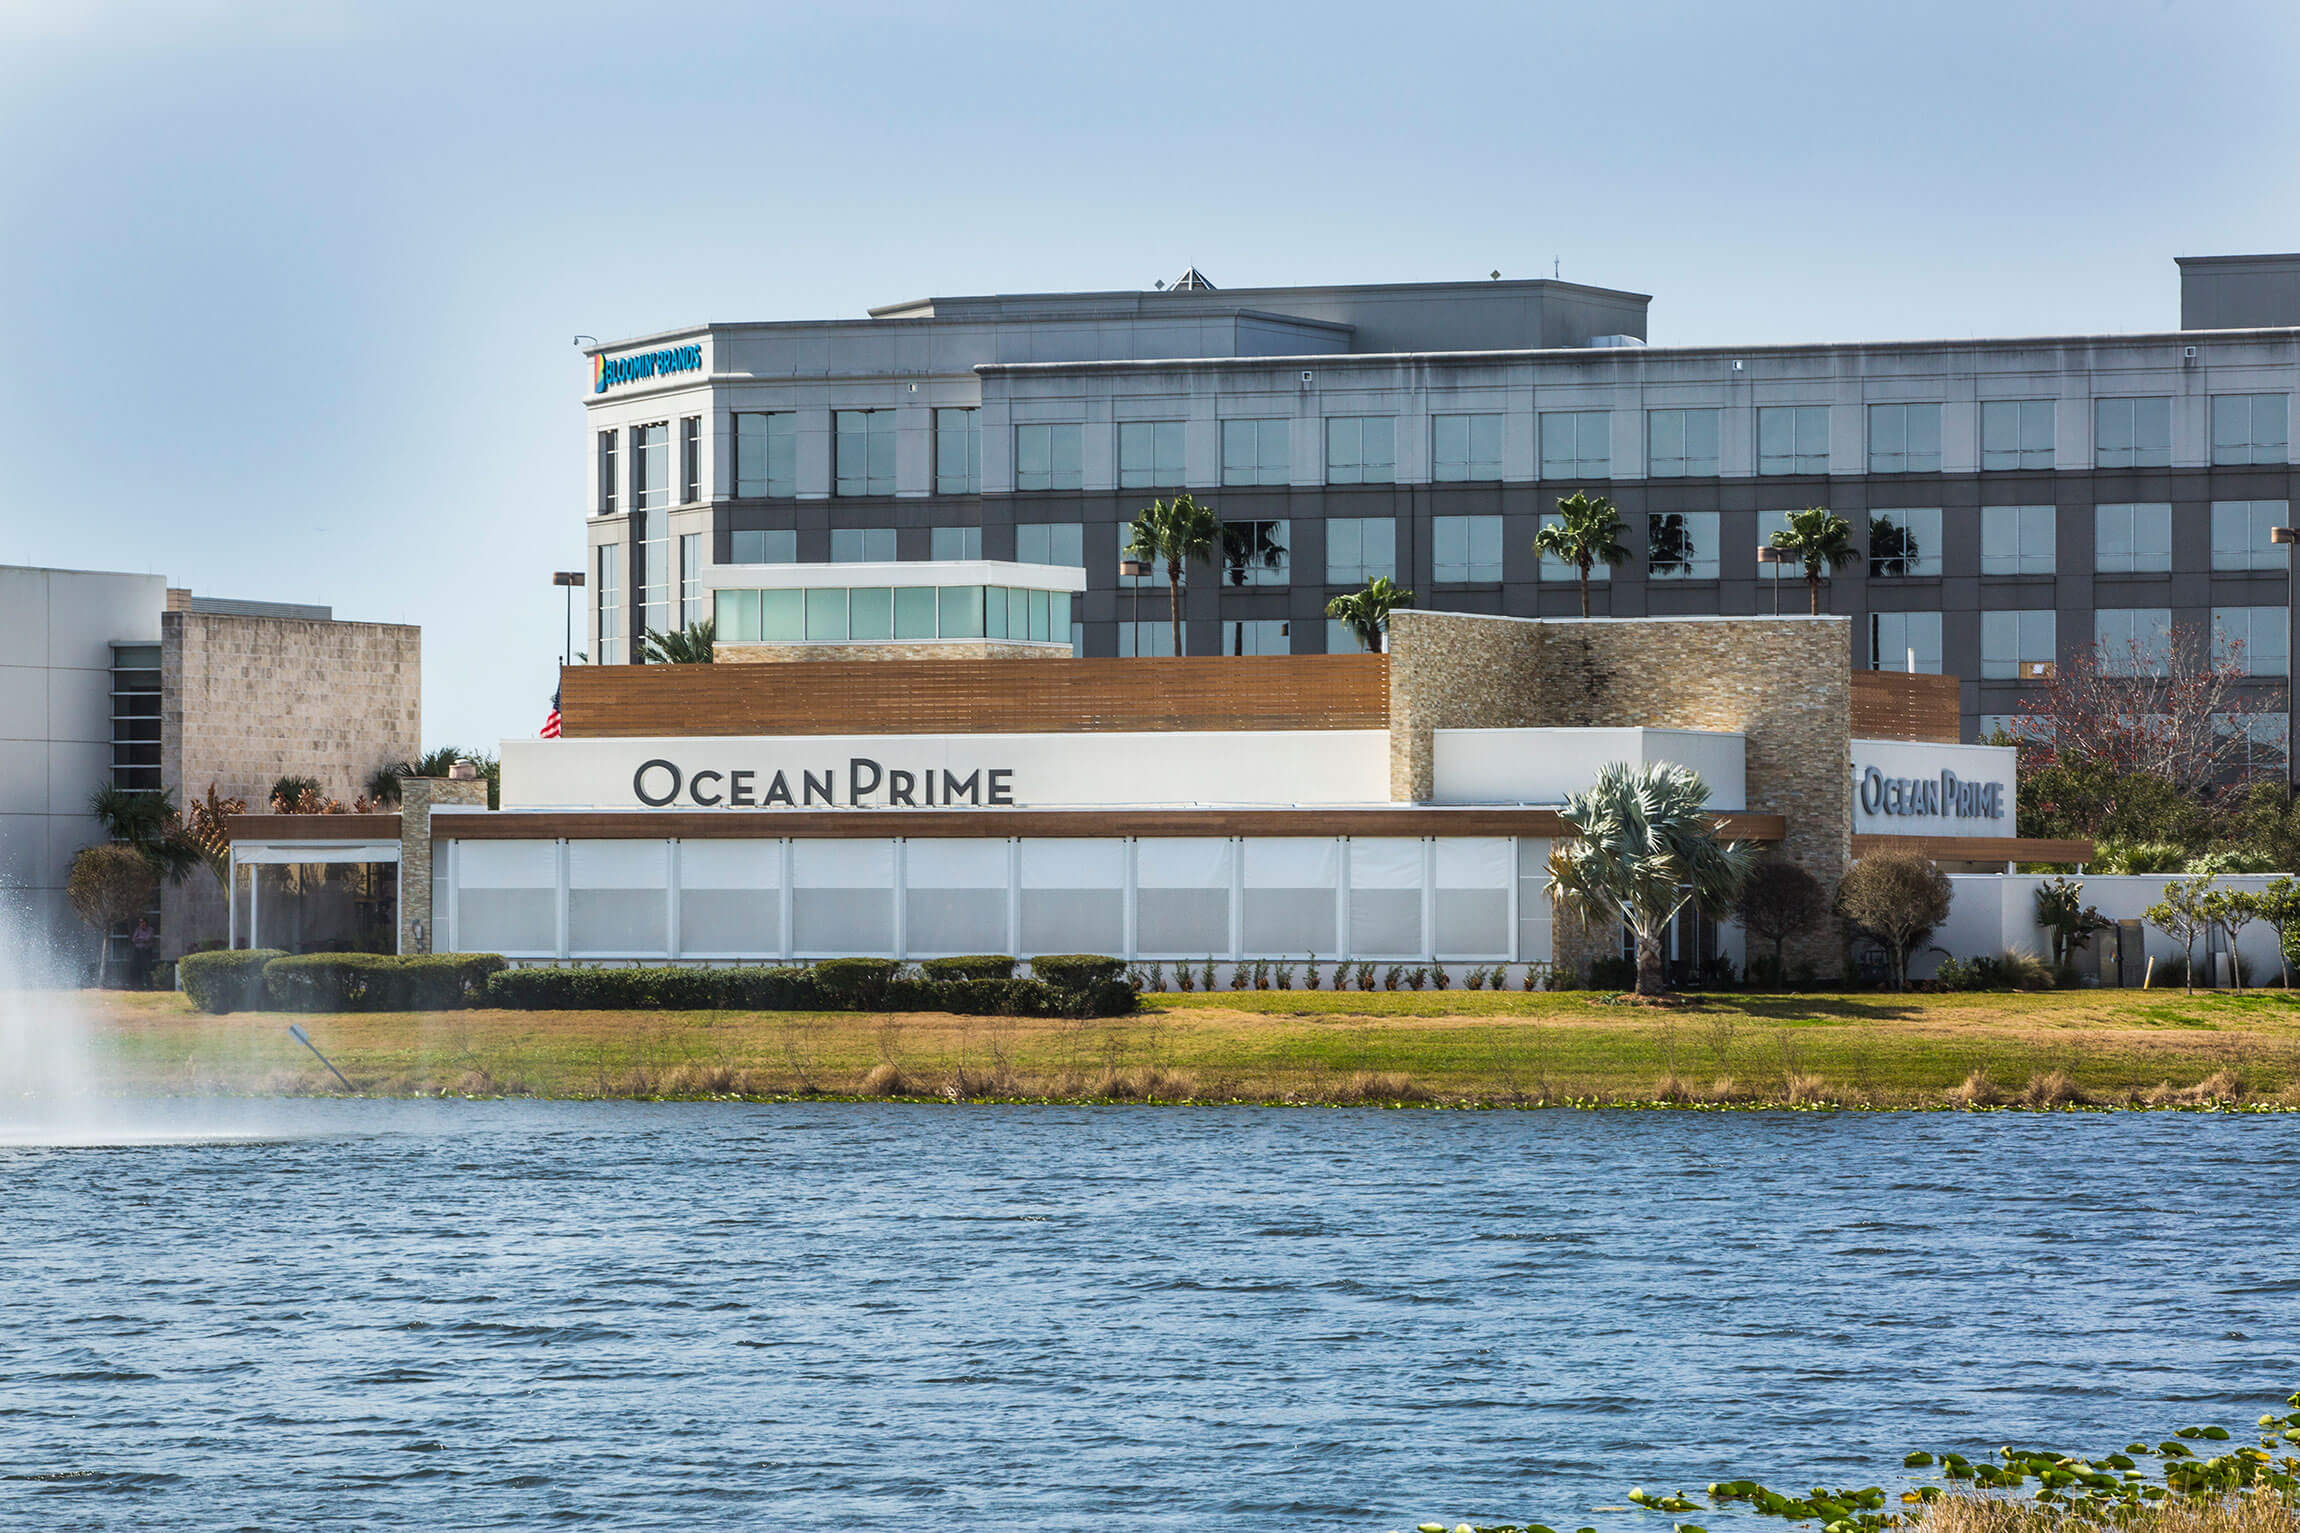 Tampa Ocean Prime - Exterior restaurant on water